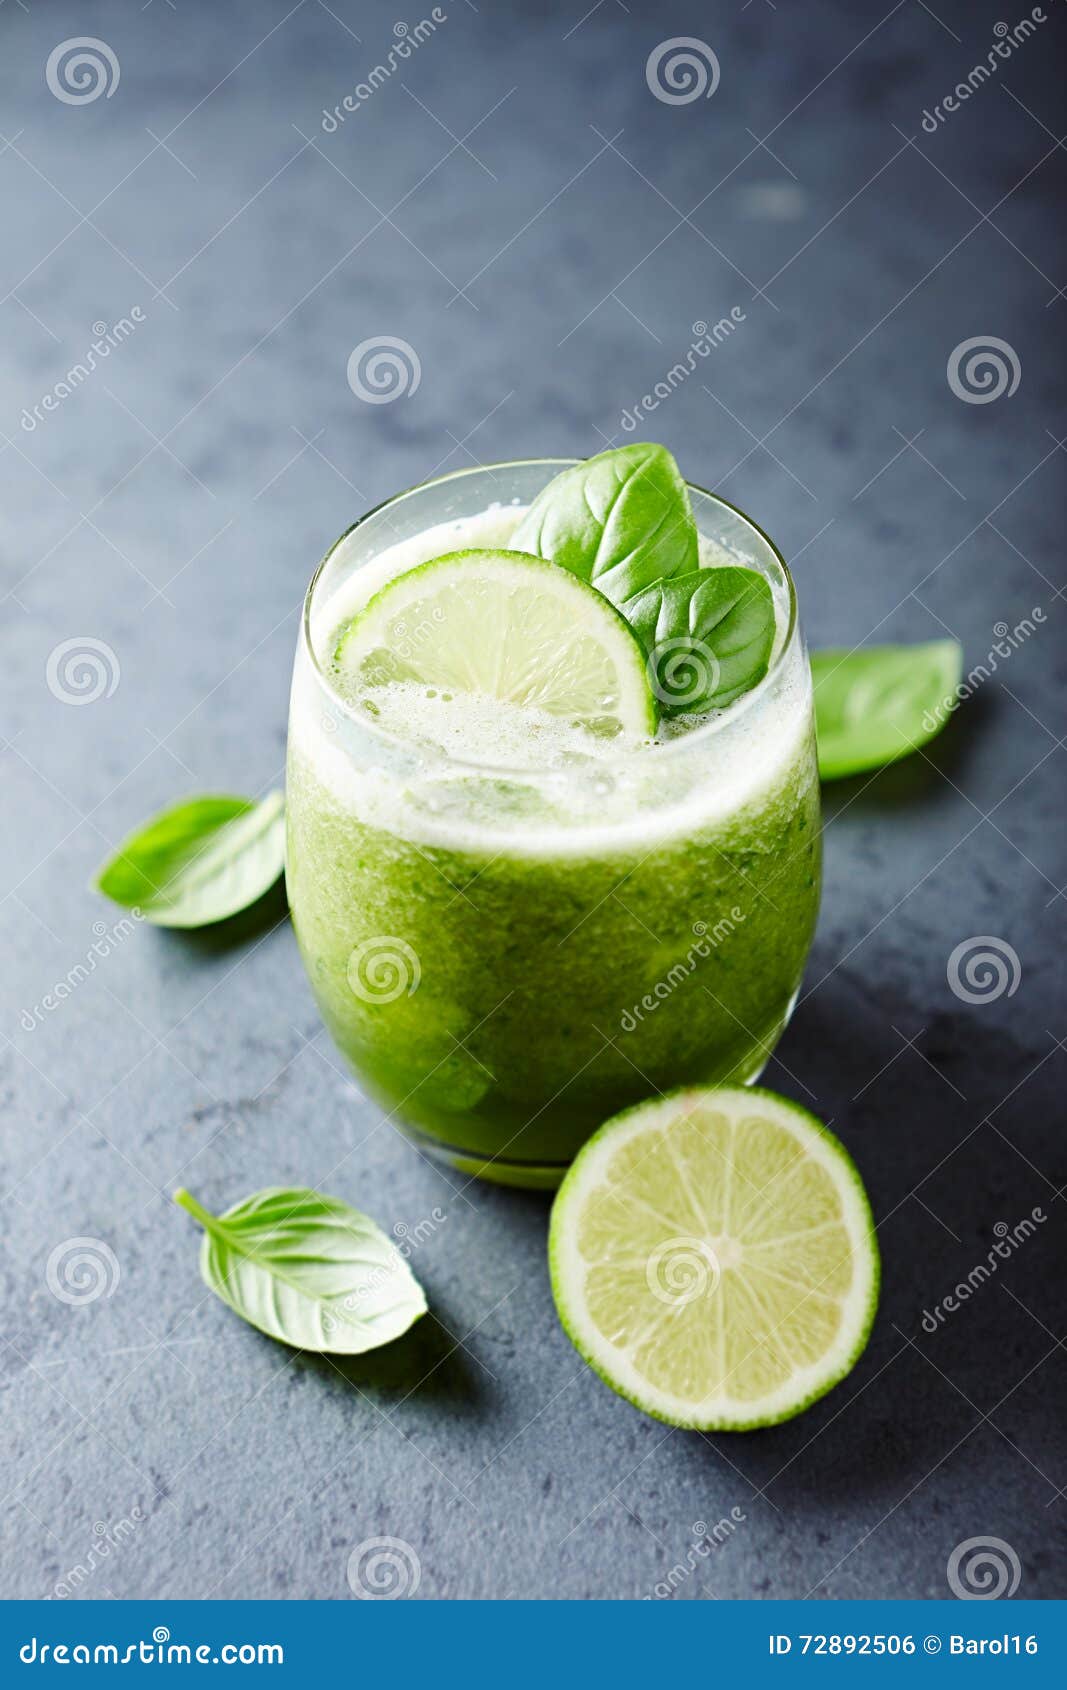 cucumber and basil aqua fresca with lime juice